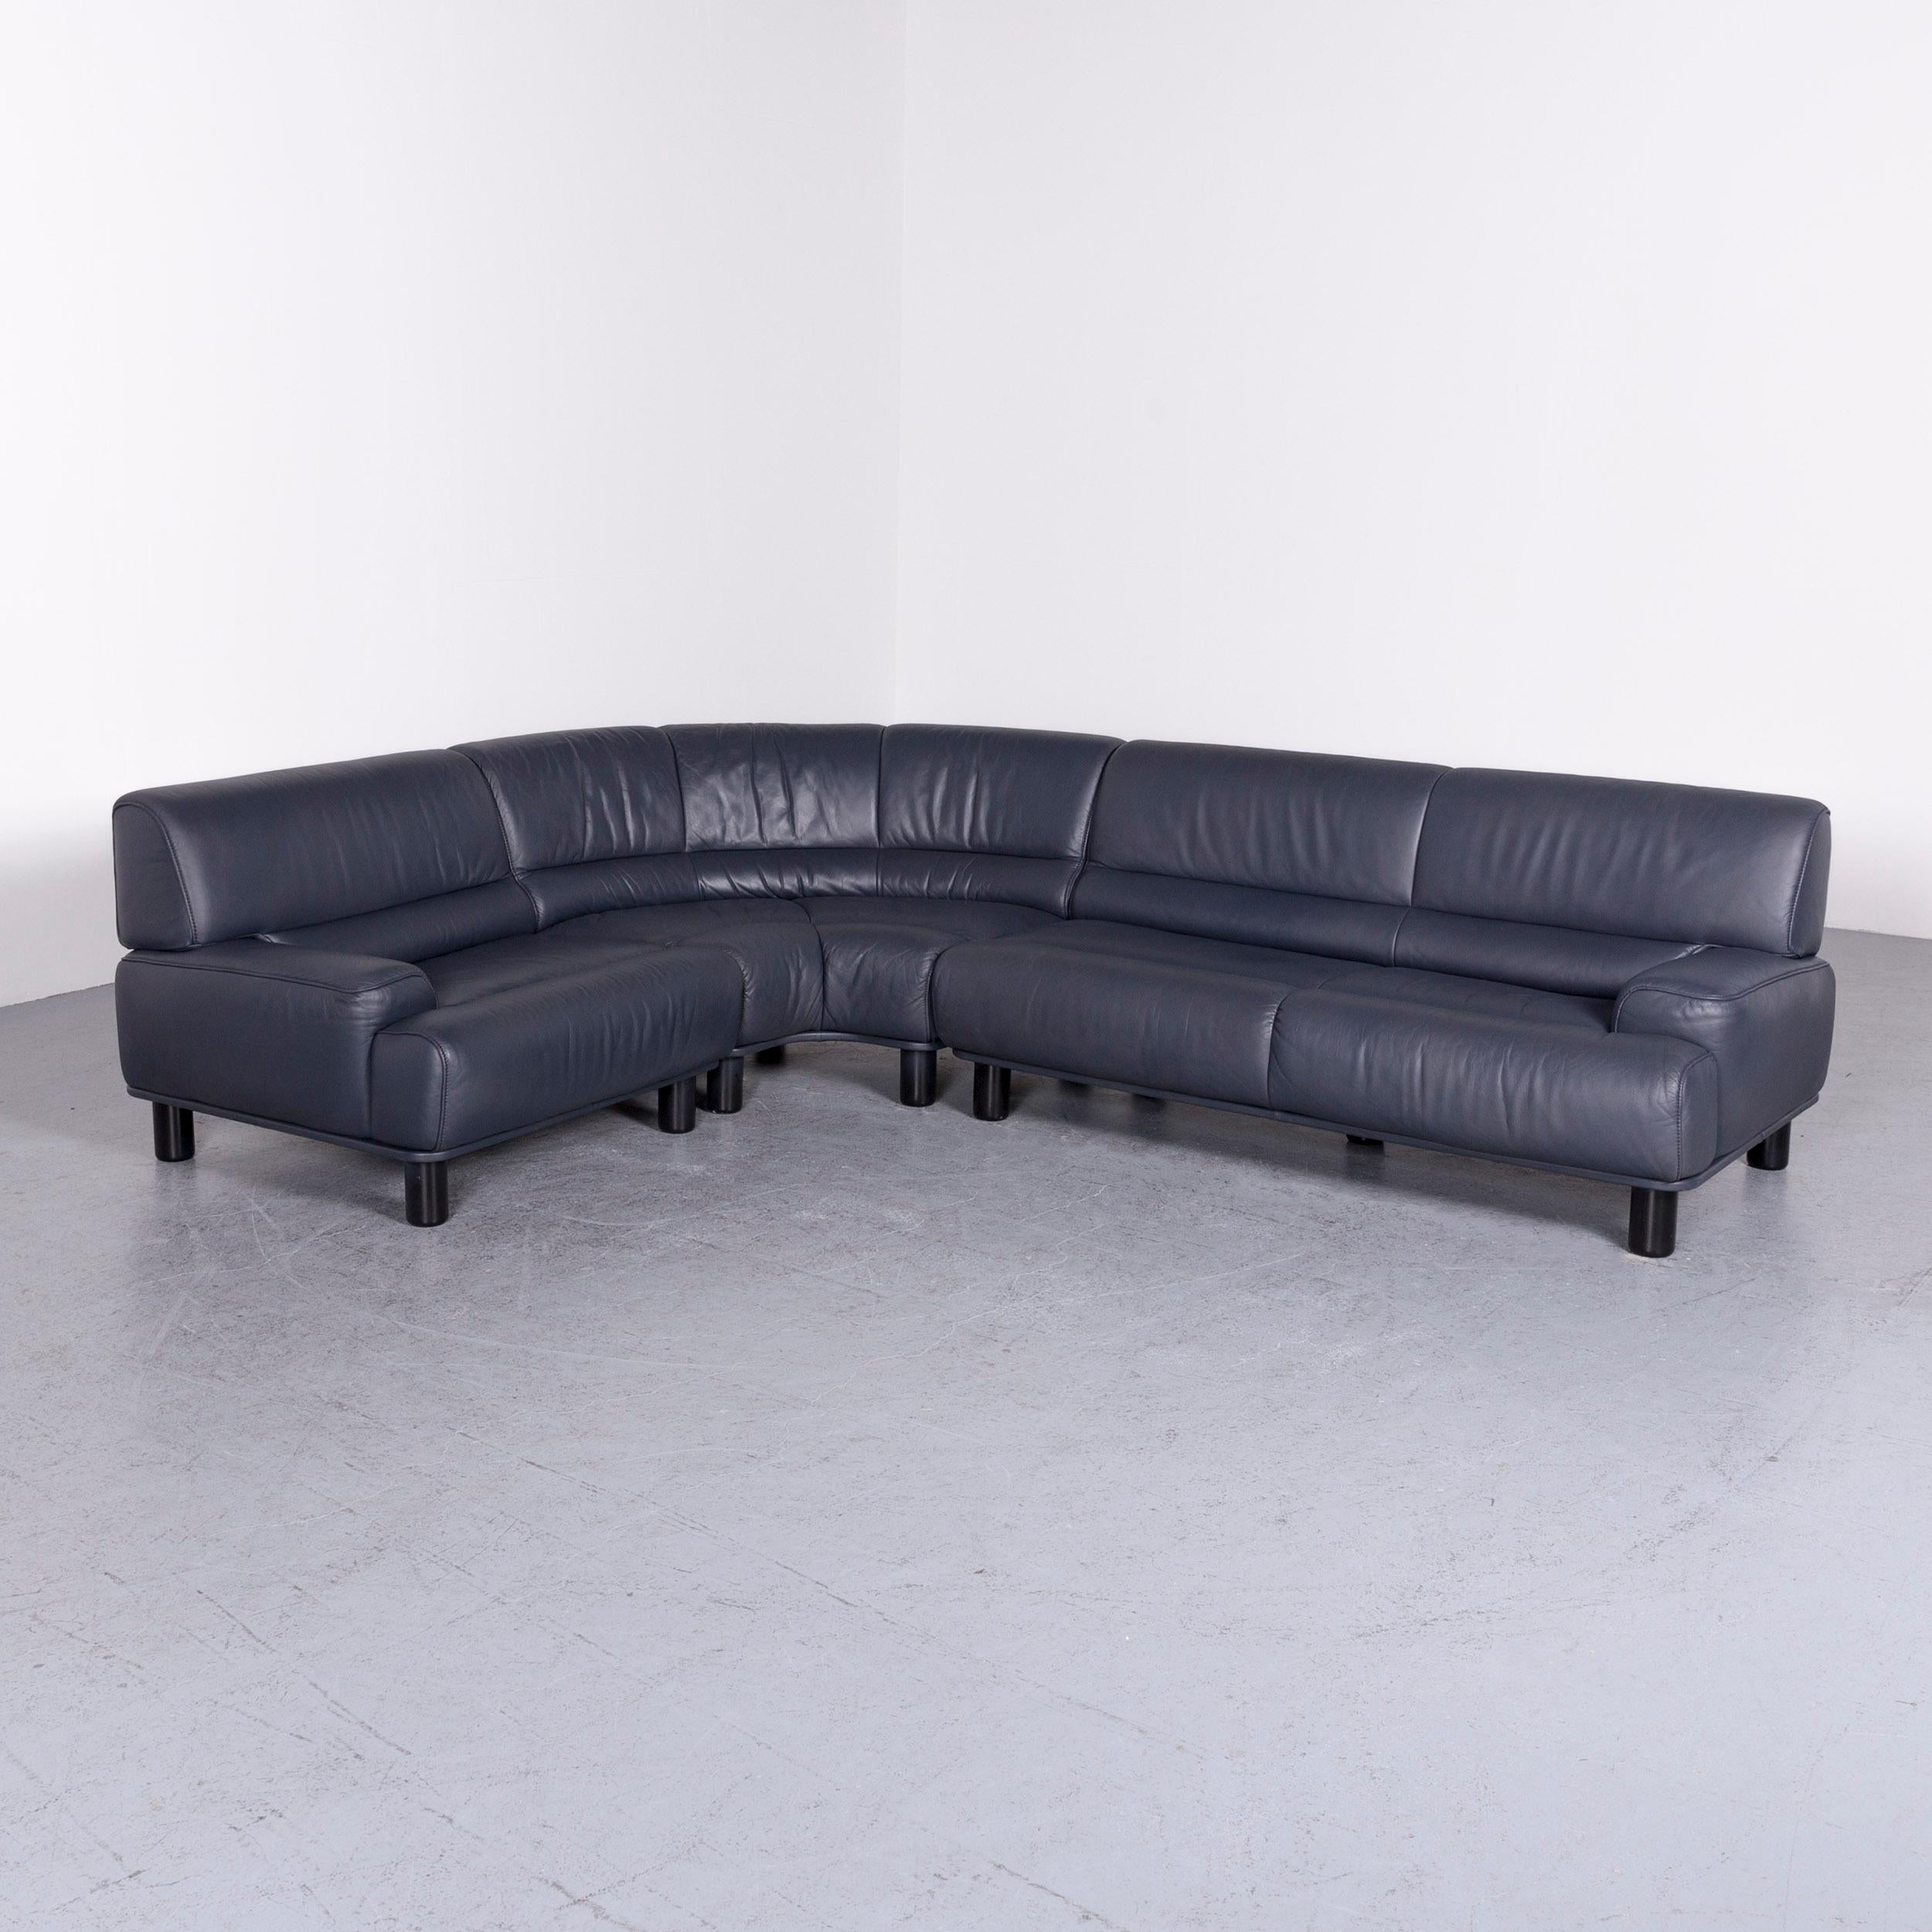 Swiss De Sede DS 18 Designer Leather Corner Couch Armchair Set Sofa